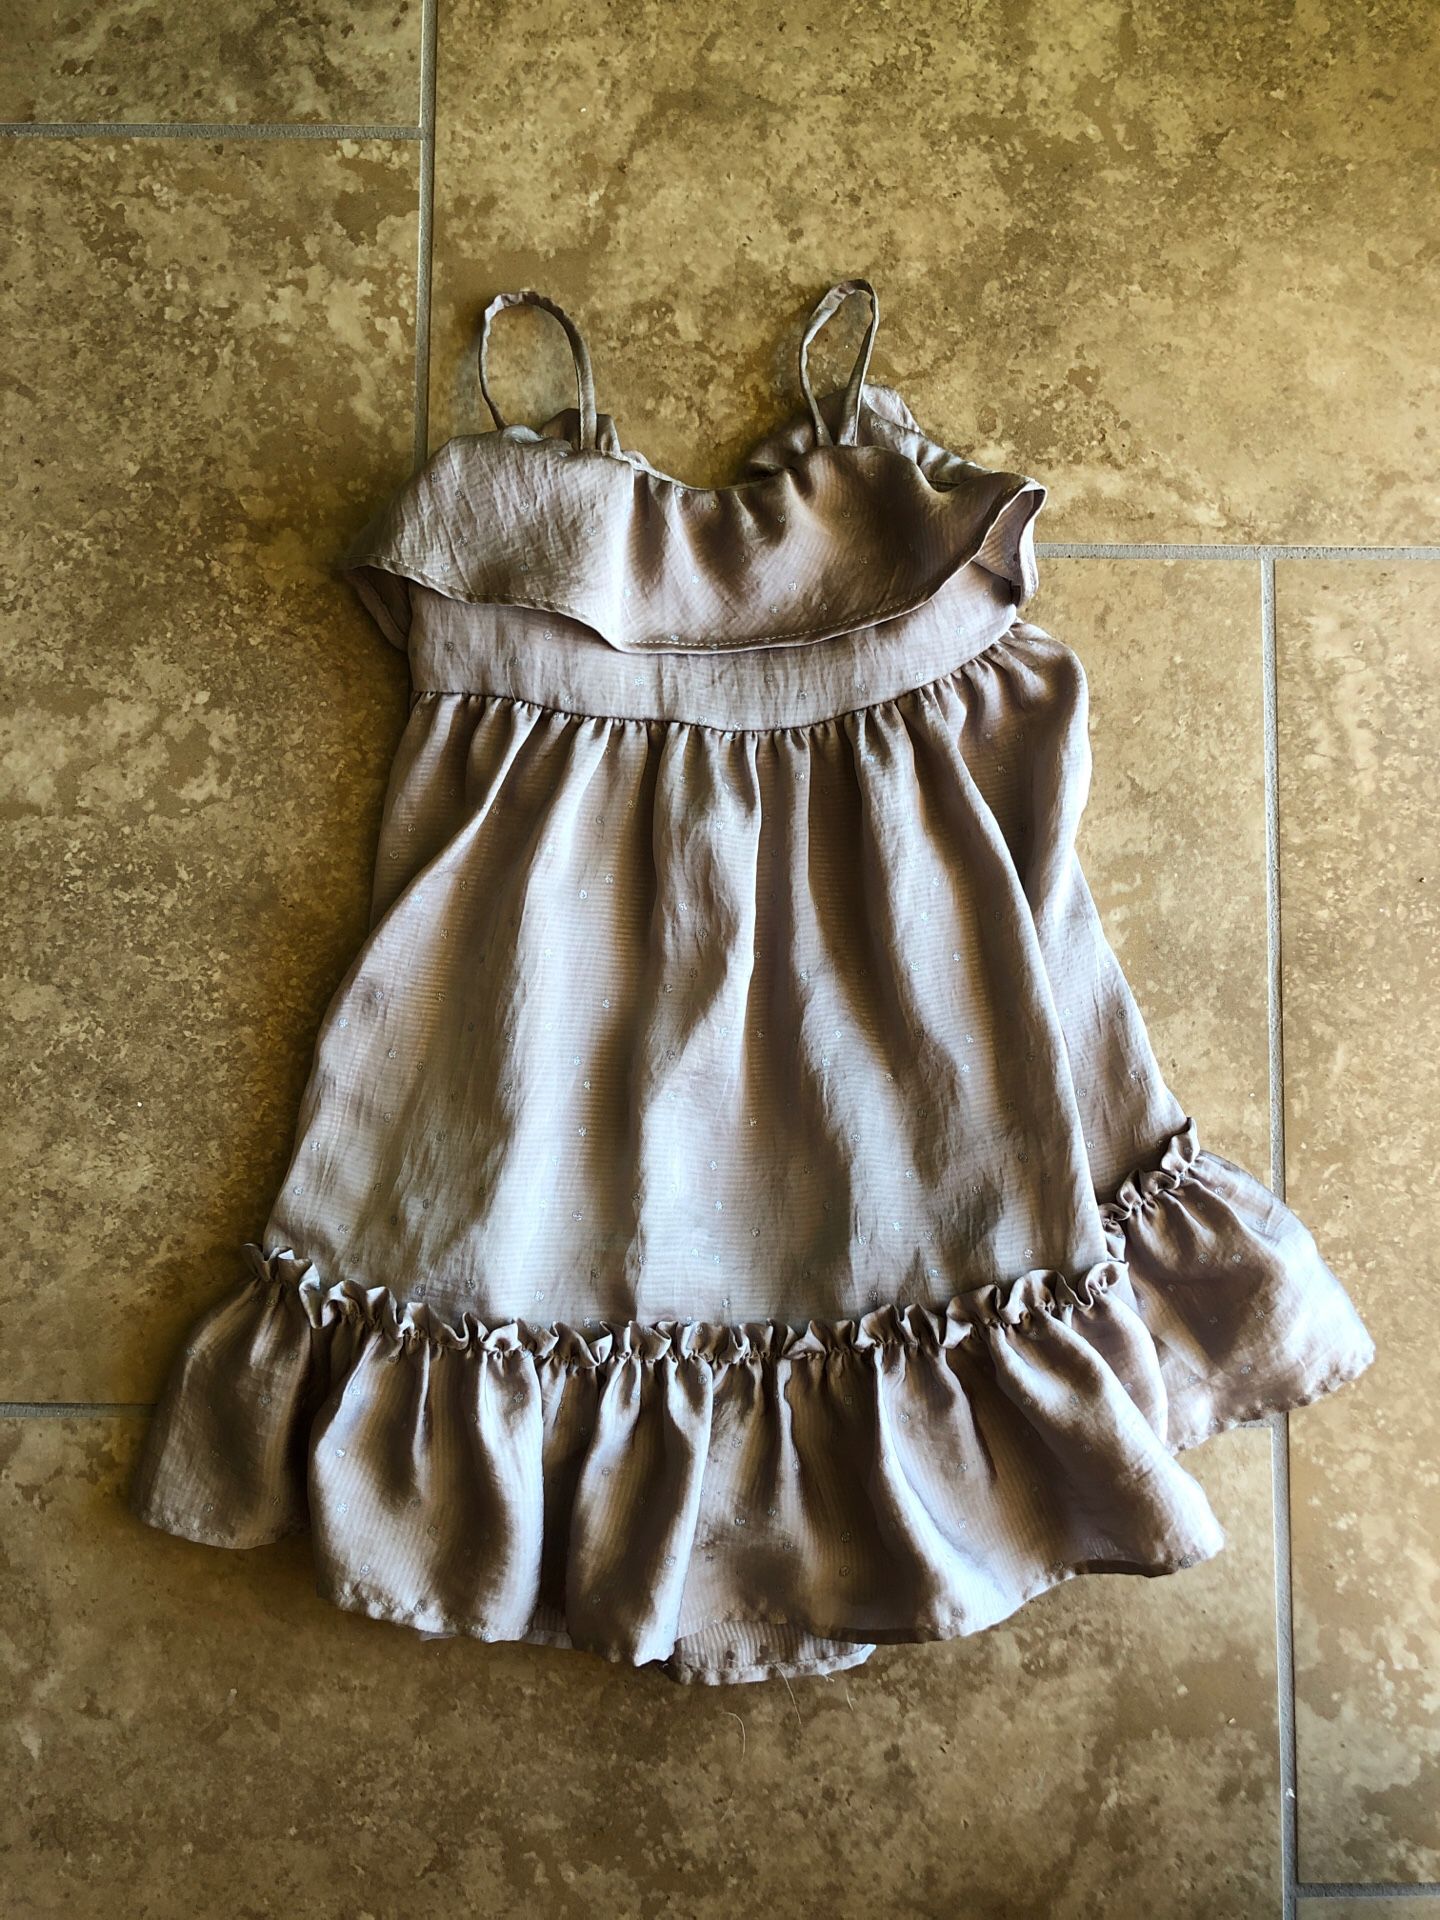 Baby GAP Tan Silver Polka Dot Toddler Dress 18-24 Months